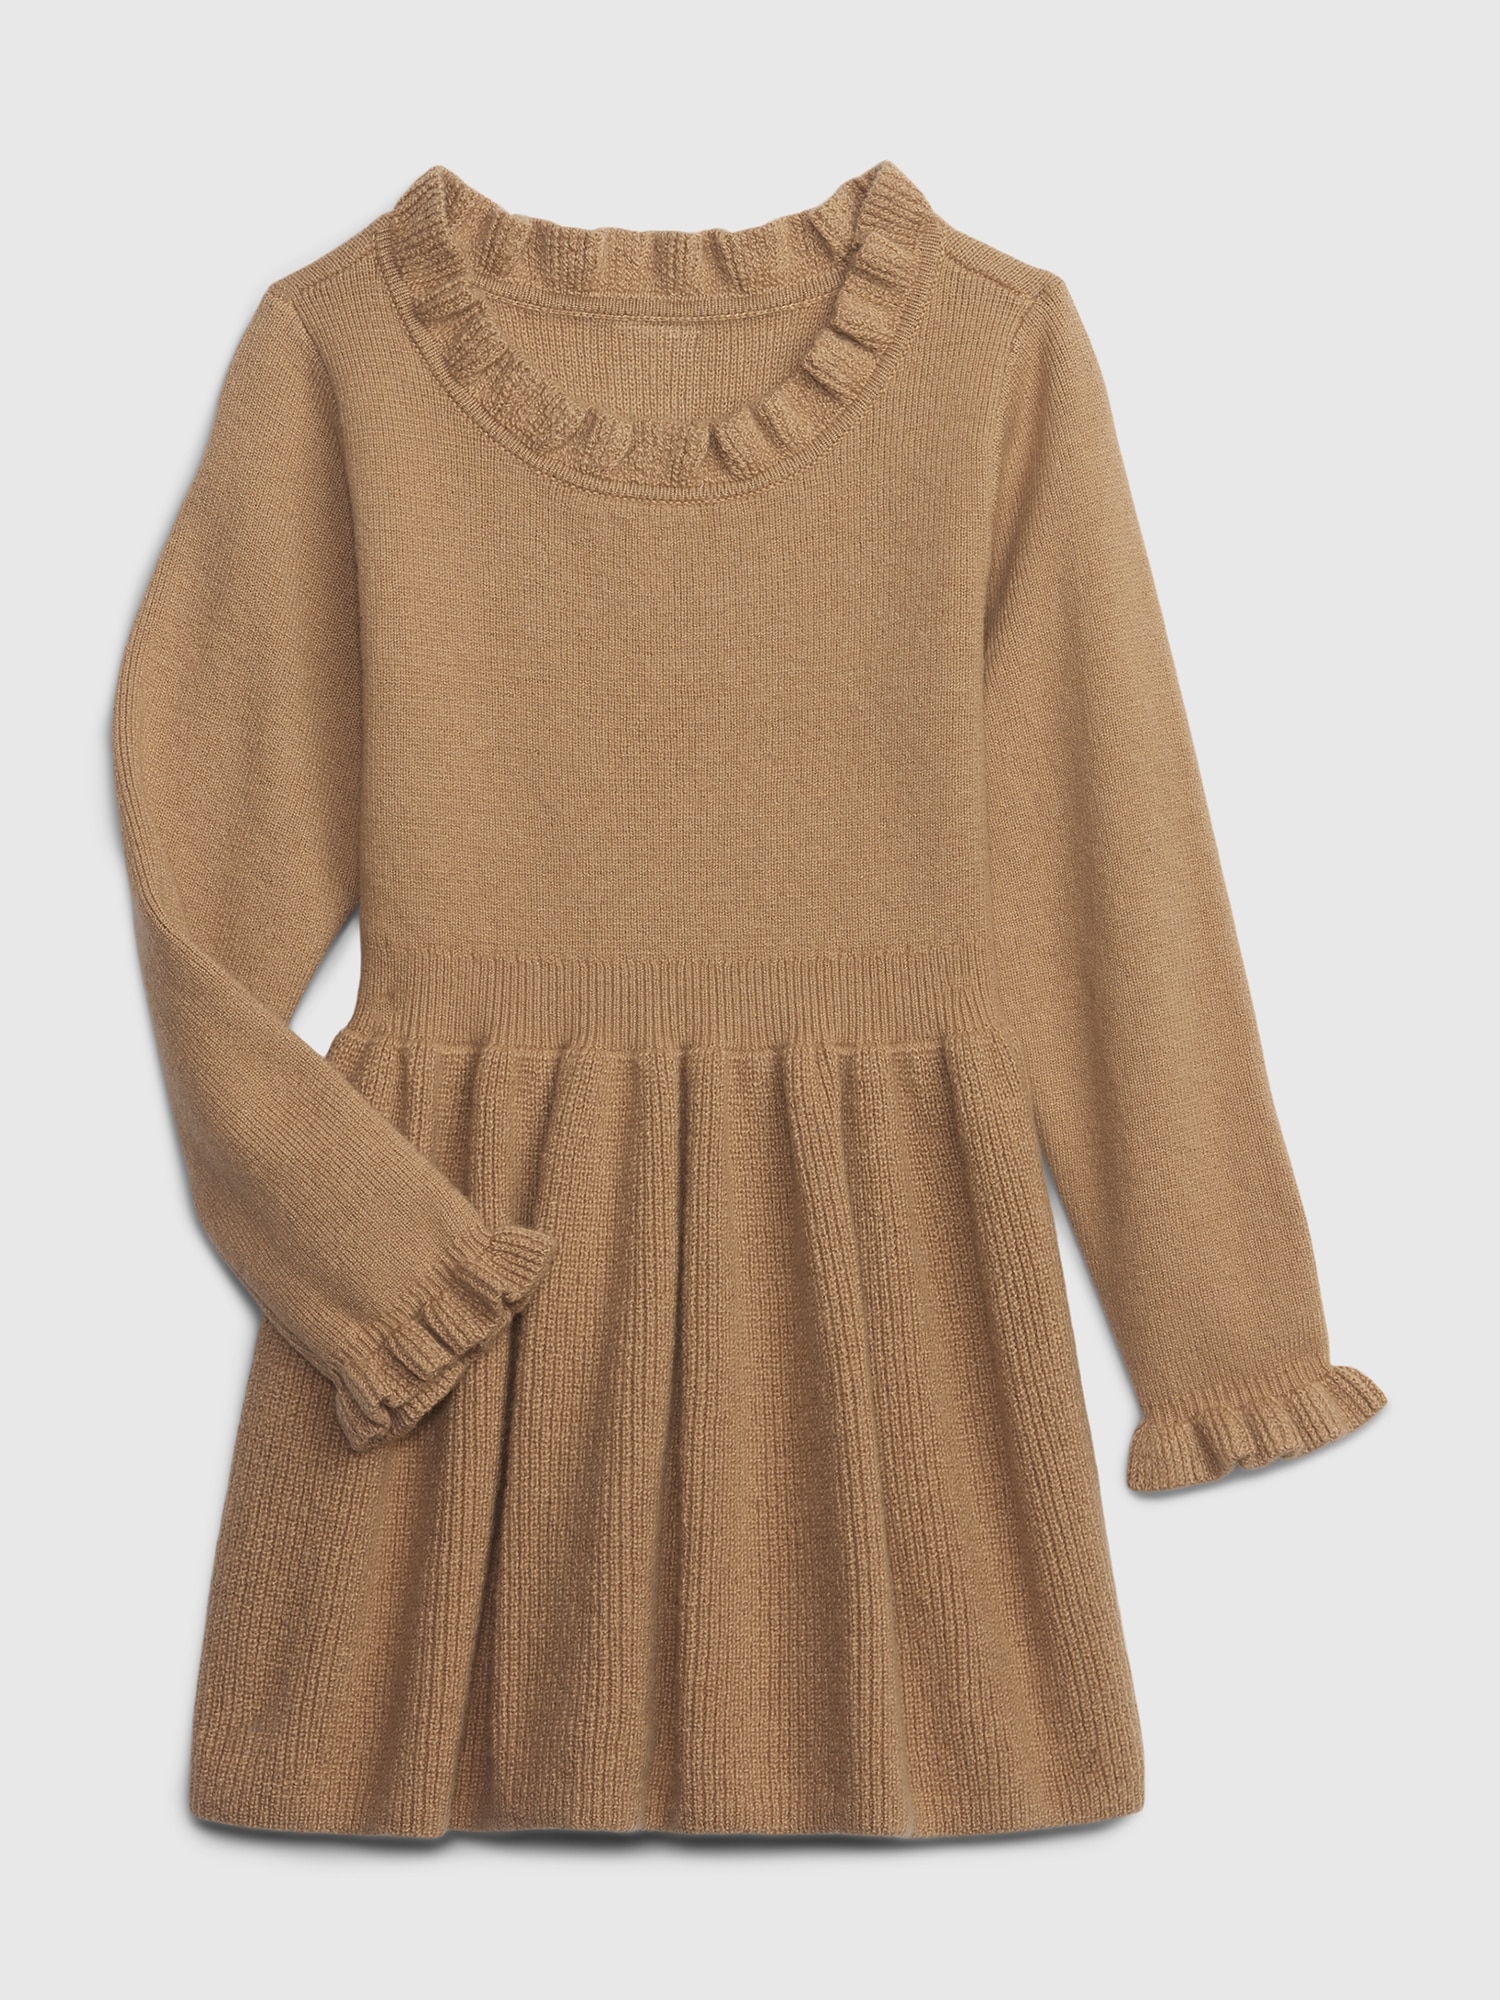 Toddler CashSoft Ruffle Sweater Dress